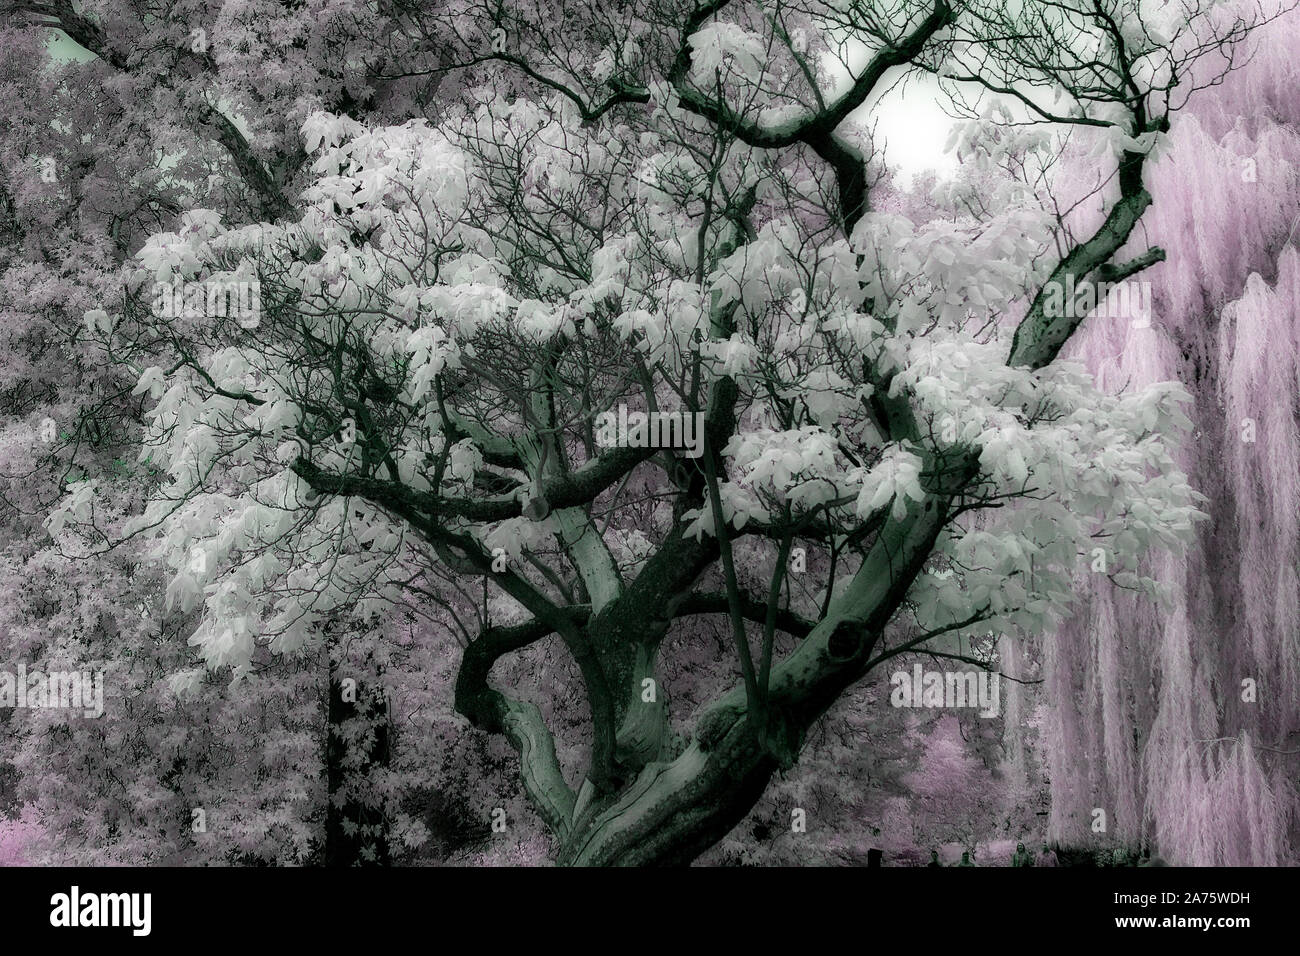 infrared image - illusion of wintertime - trees - regent's park - city of london - england - uk Stock Photo